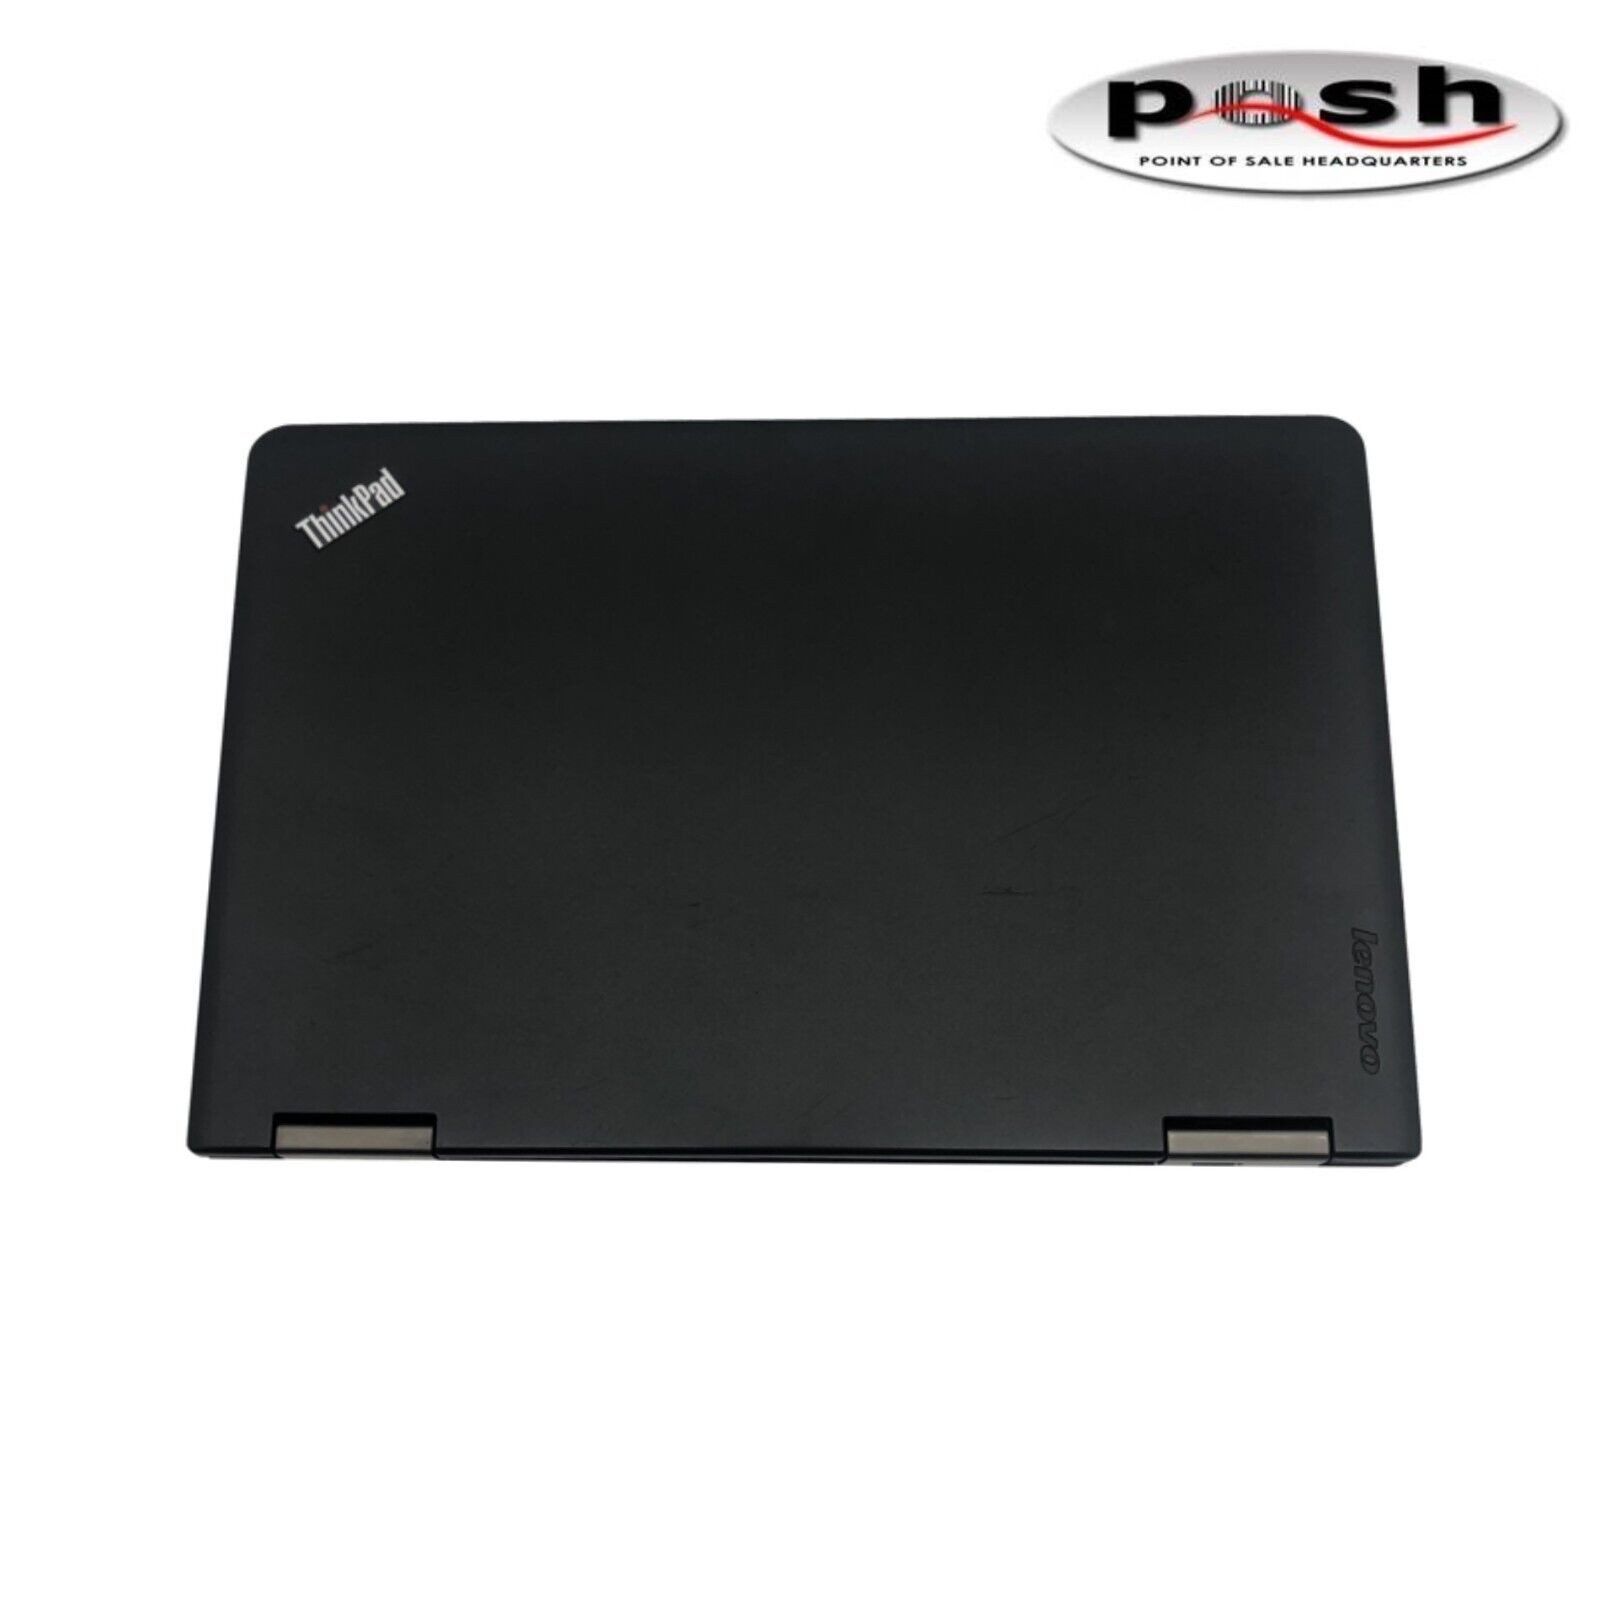 Lenovo ThinkPad S1 Yoga i7-4600U@2.10GHz, 8GB Ram, 256 GB SSD